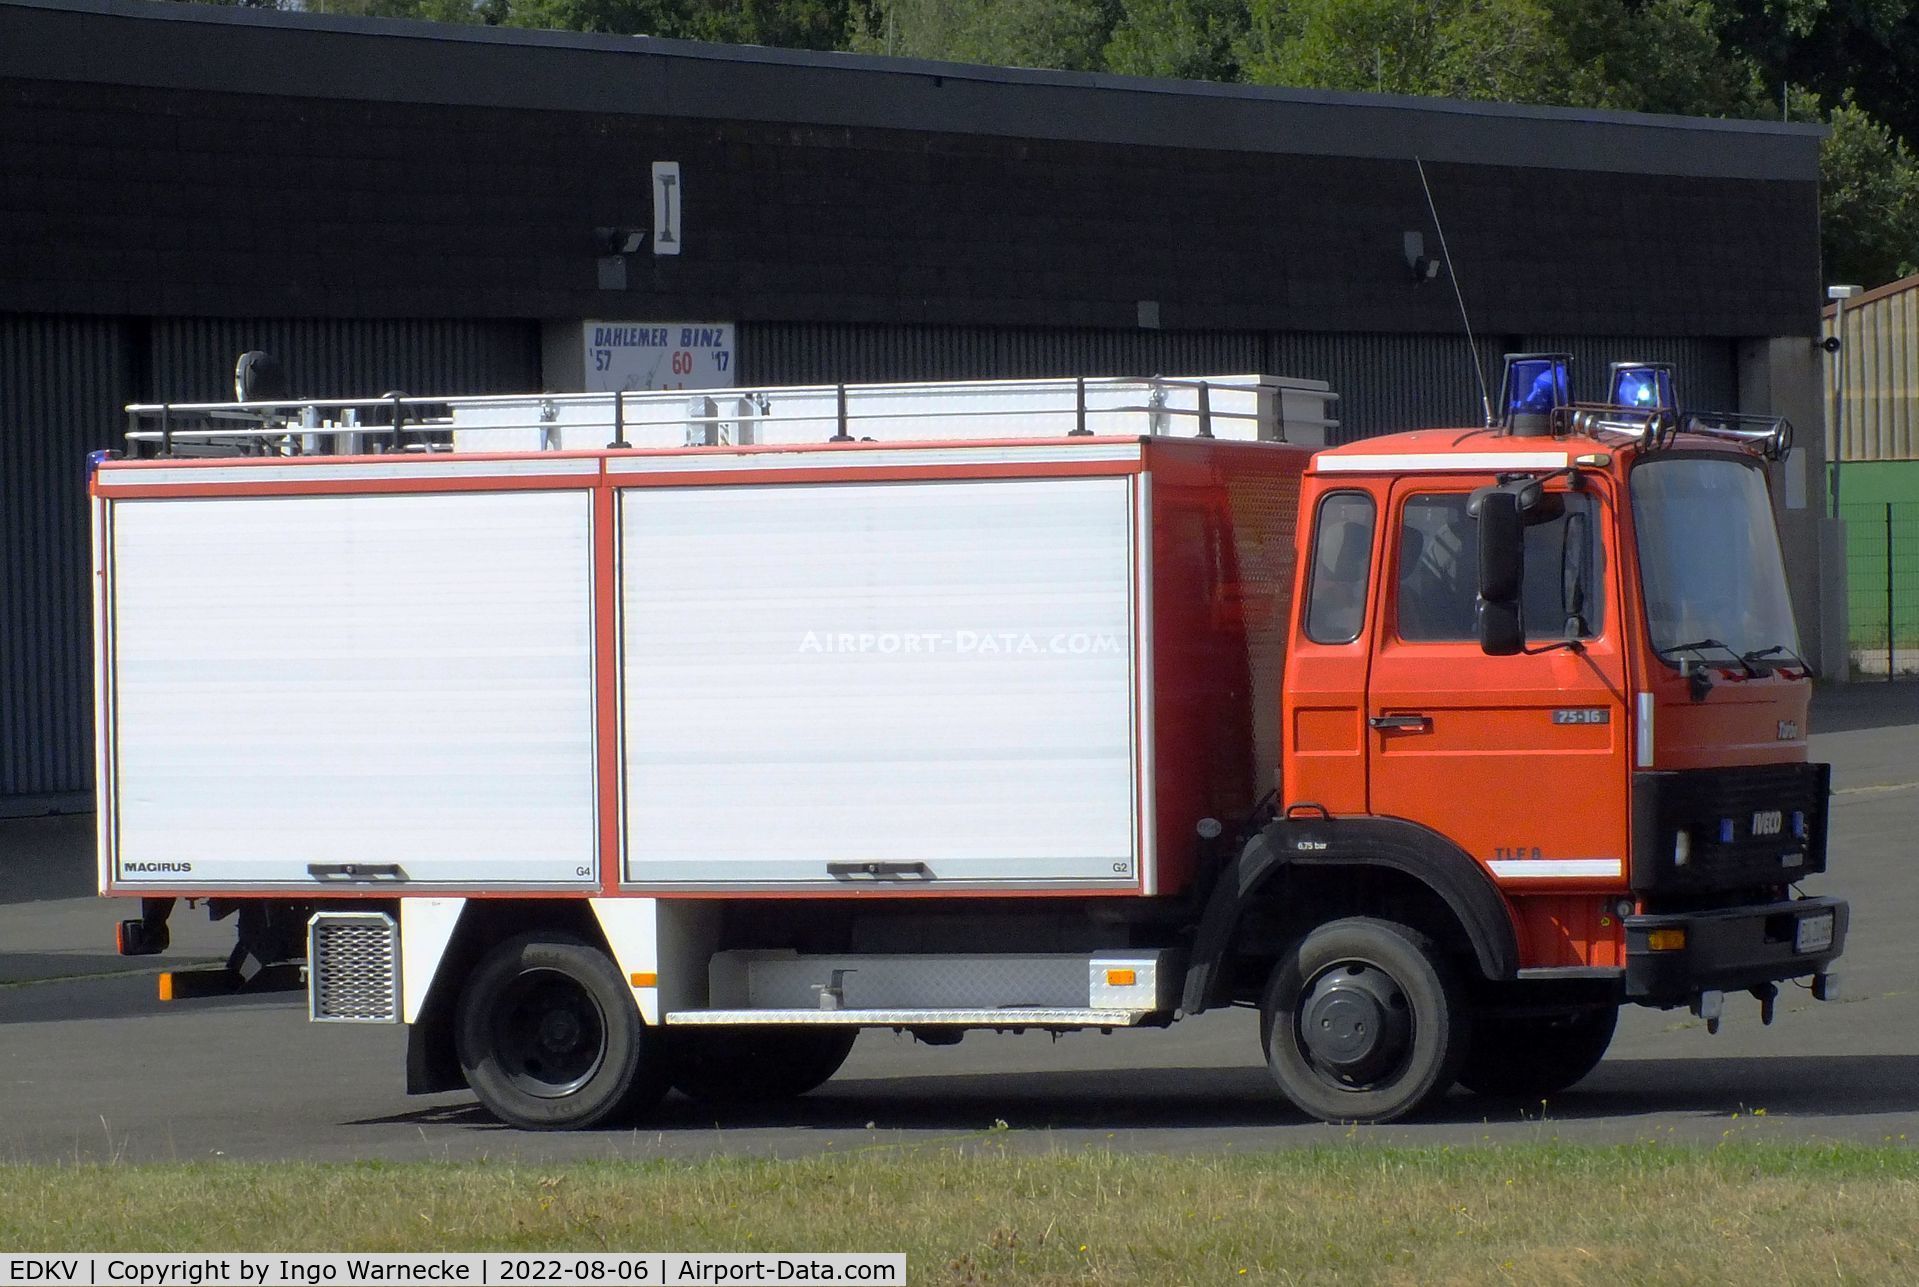 Dahlemer Binz Airport, Dahlem Germany (EDKV) - airfield fire truck at Dahlemer Binz airfield